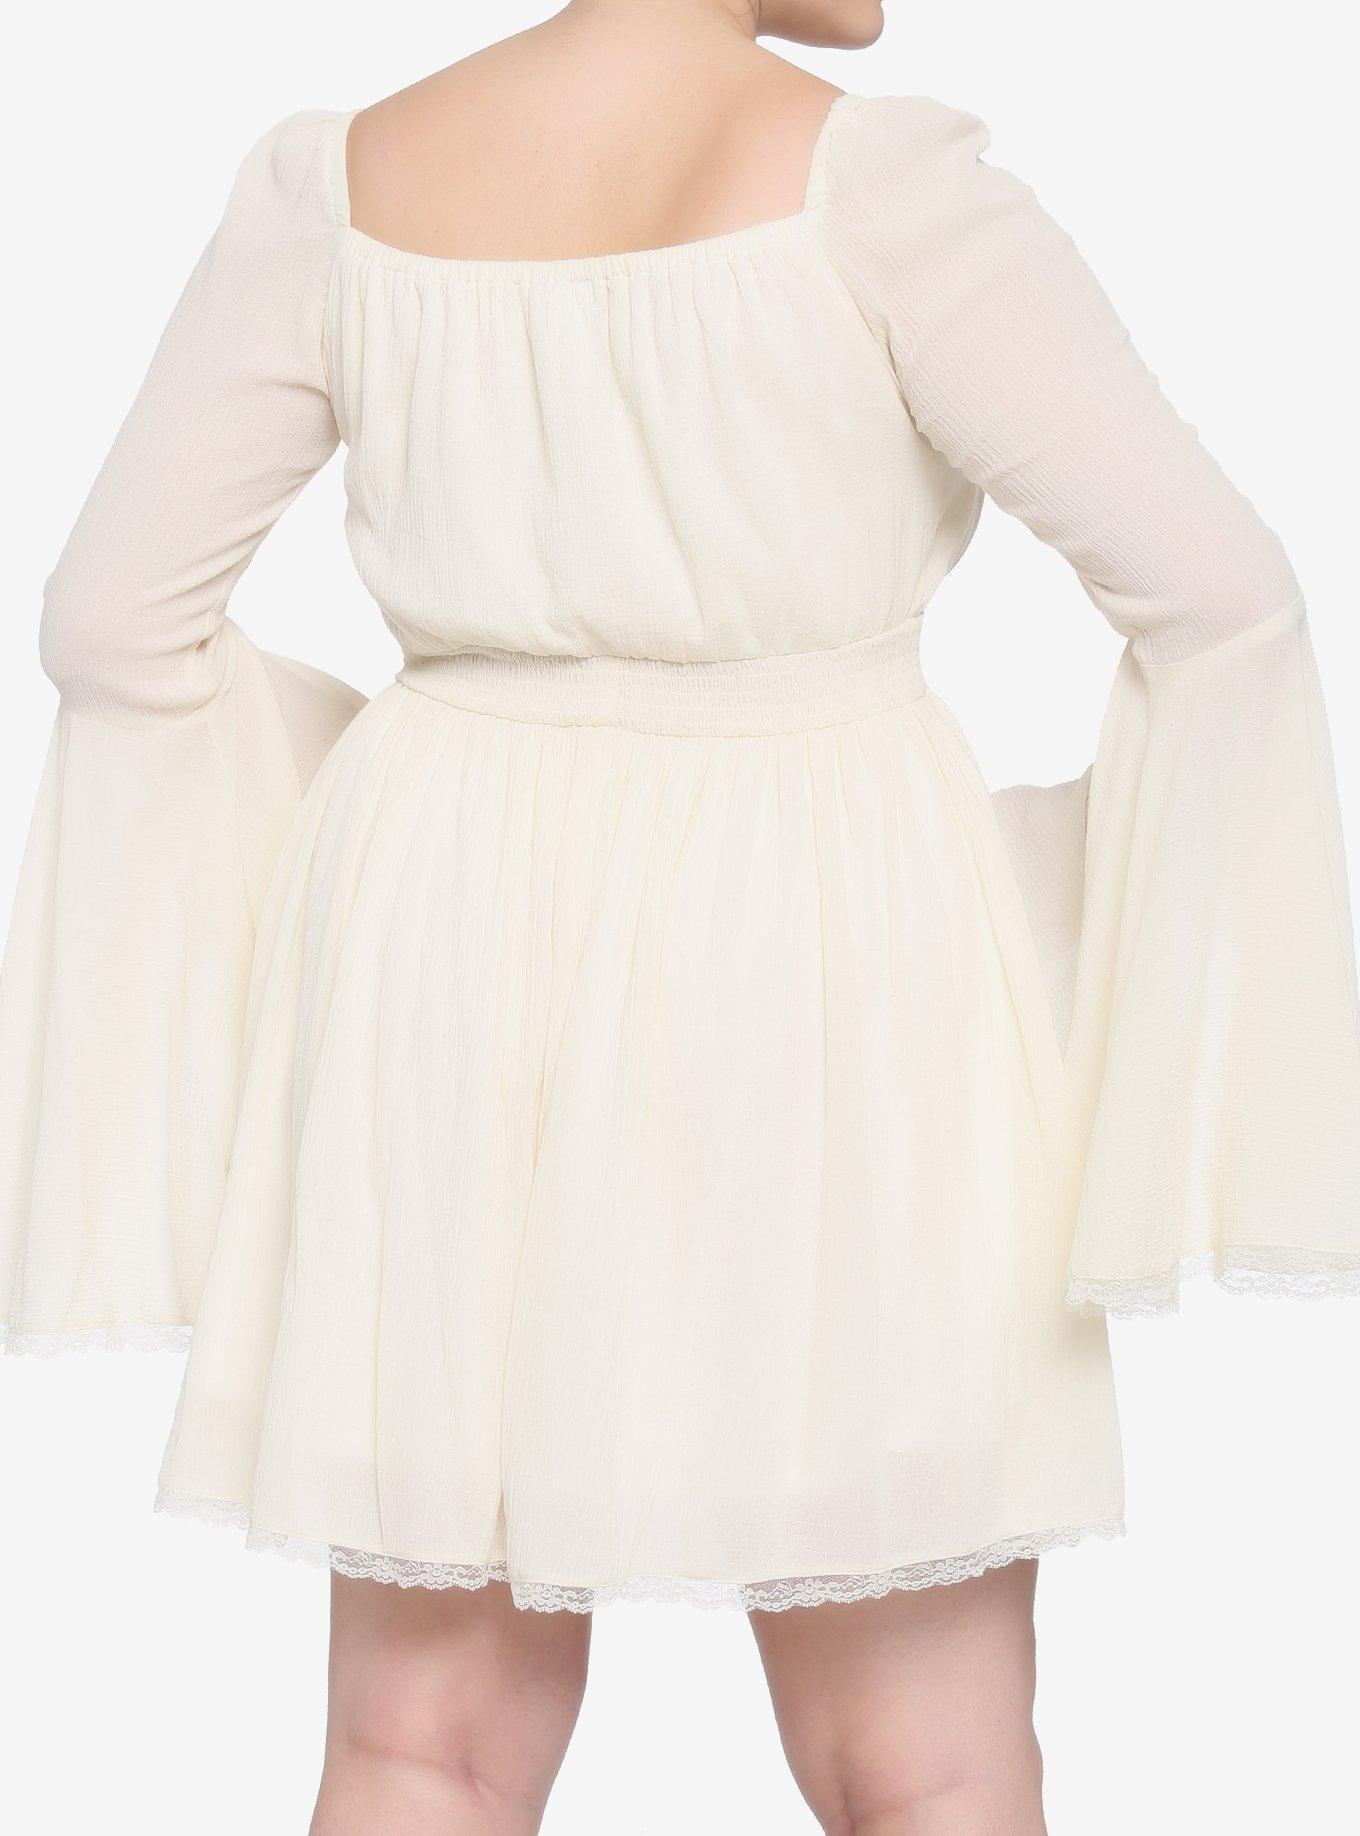 Cream Bell Sleeve Smocked Dress Plus Size, VANILLA ICE, alternate